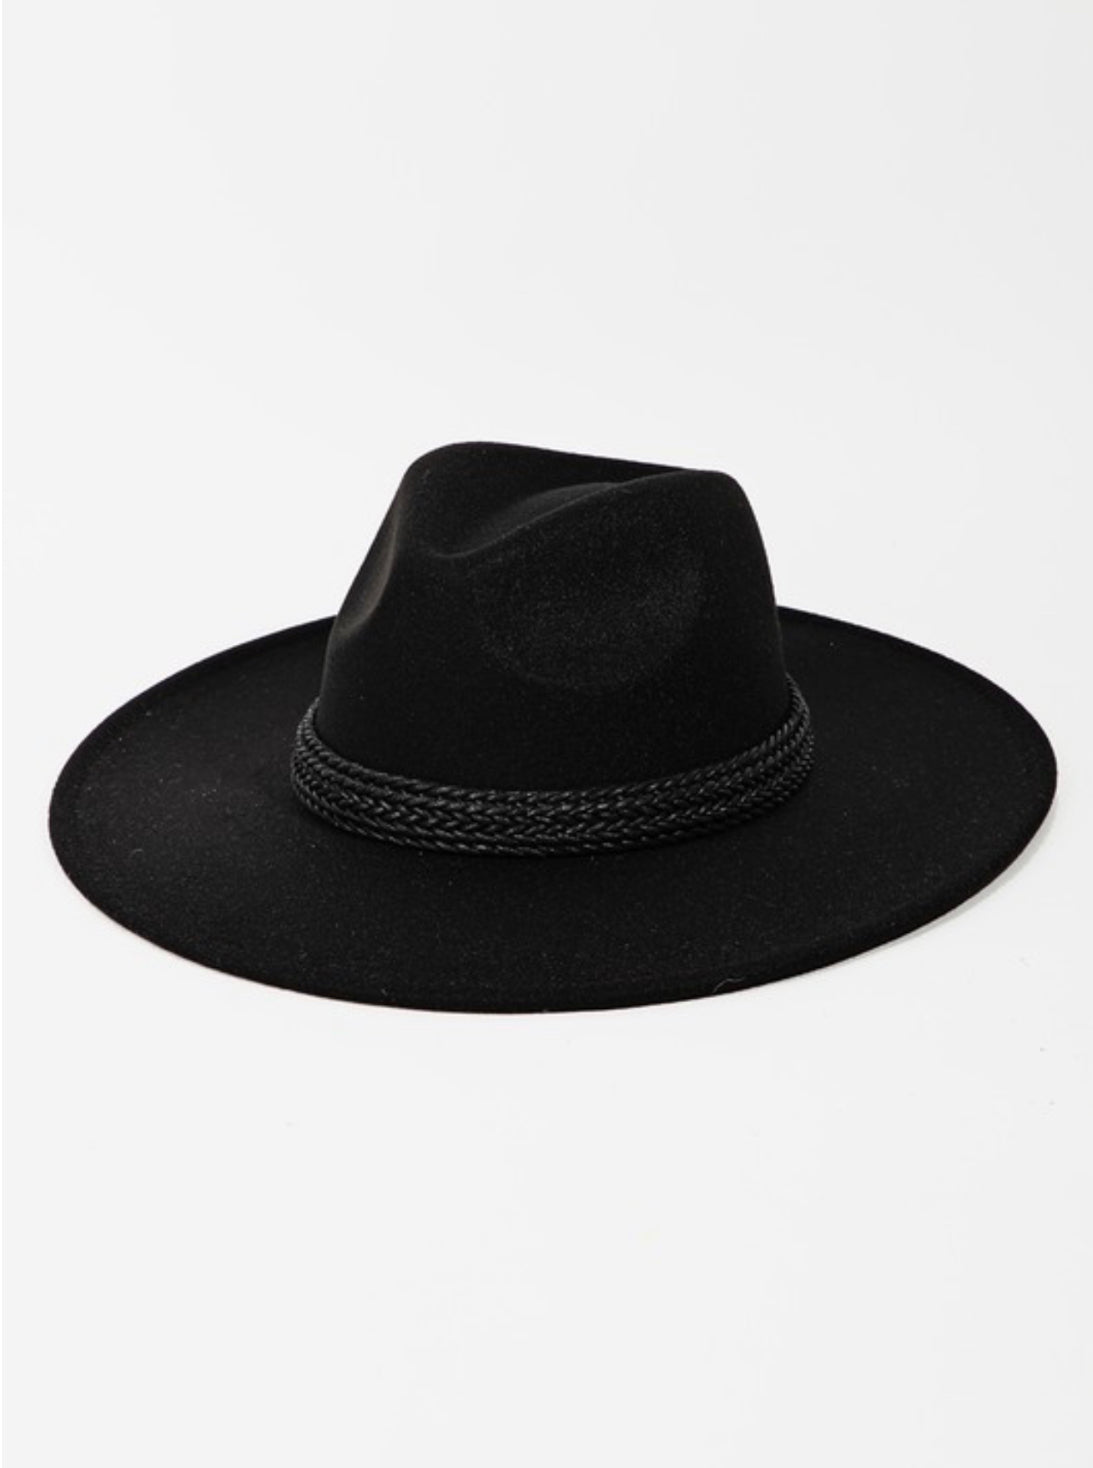 “Tahoe” flat brim hat